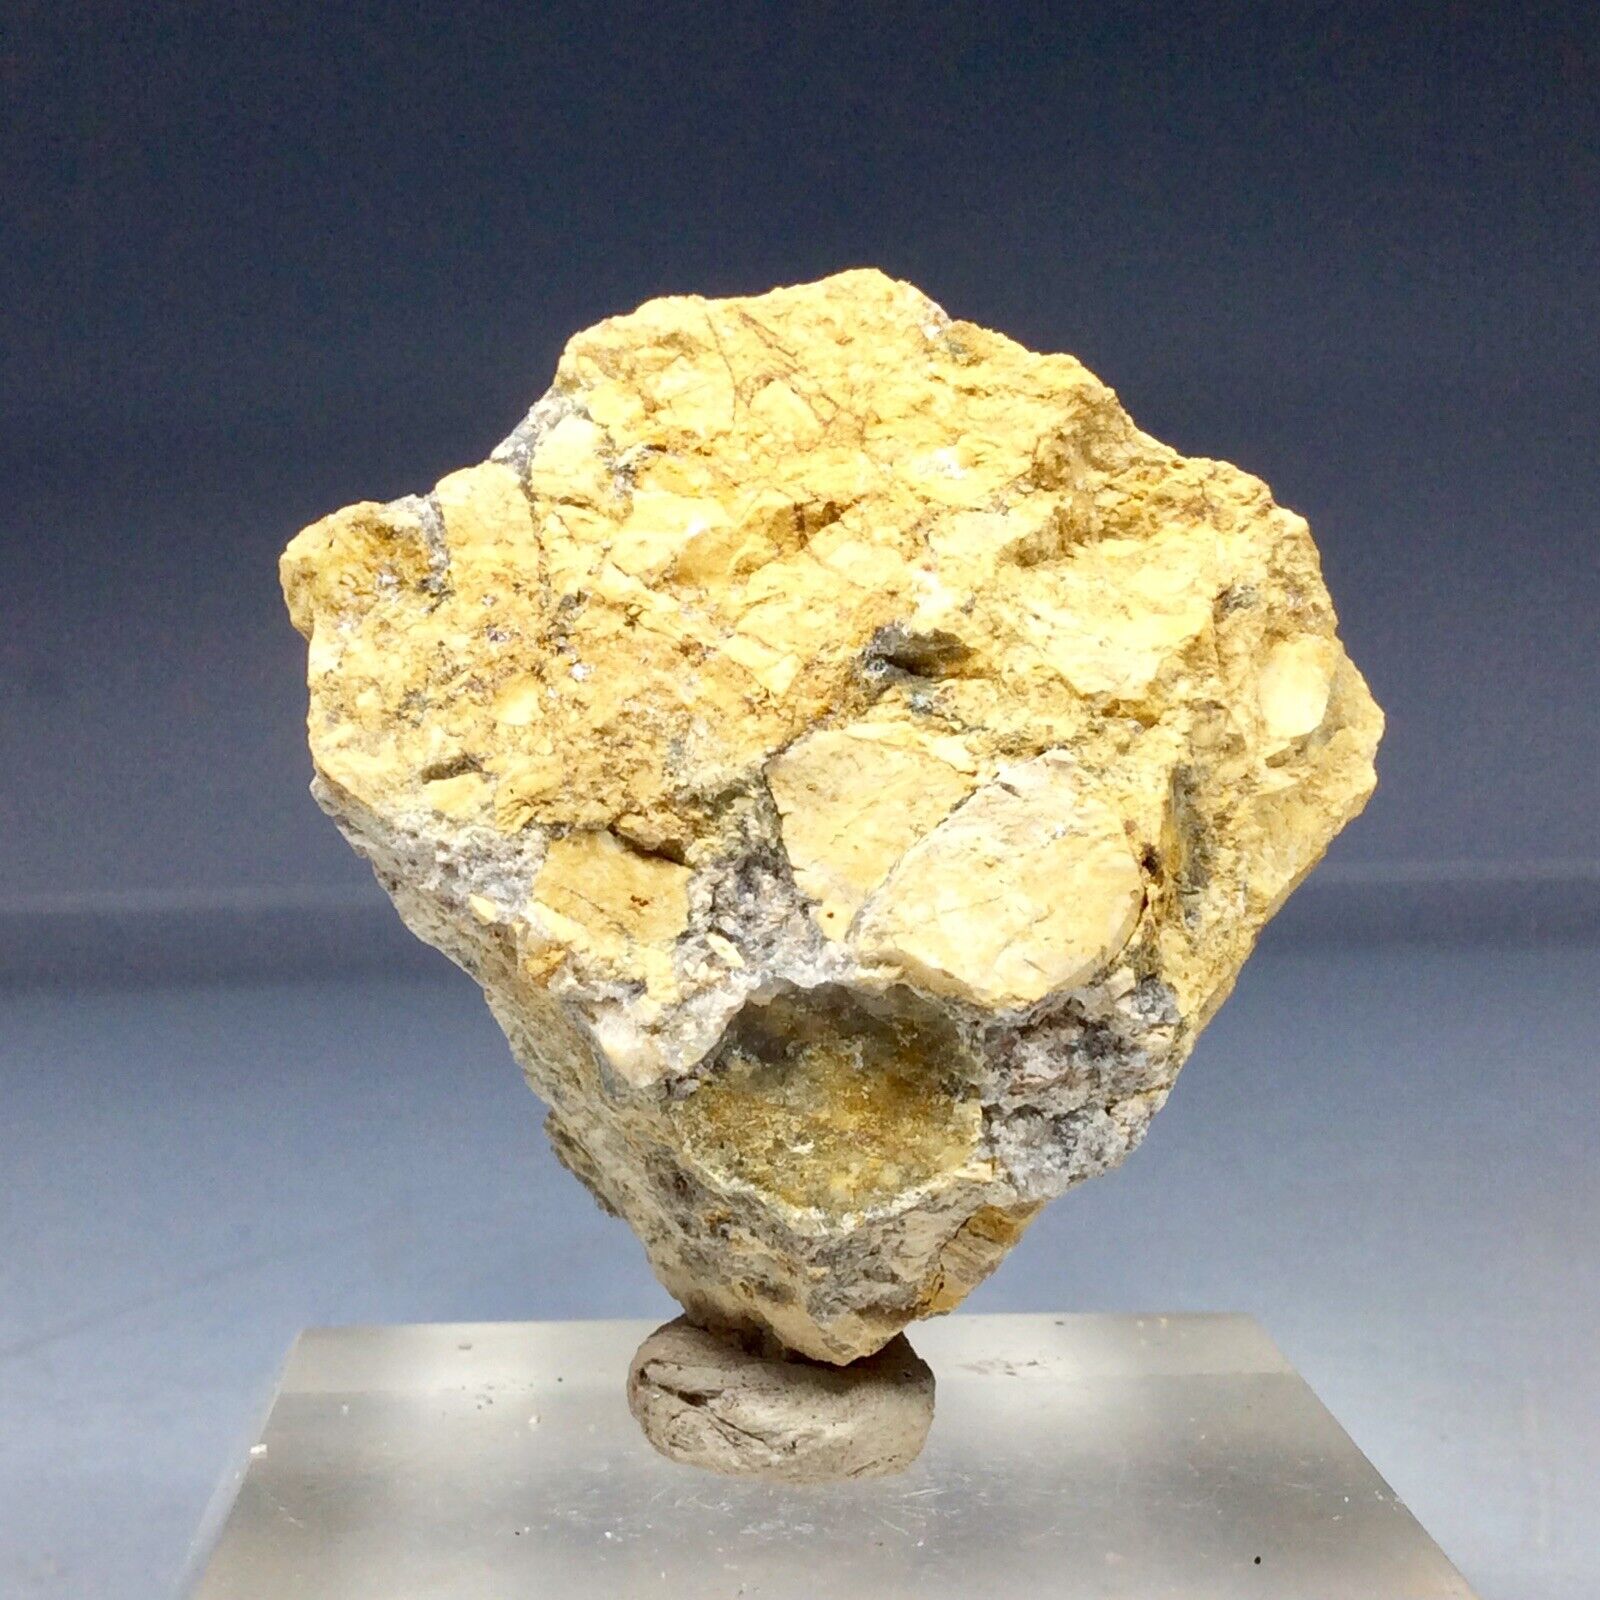 SS Rocks - Copiapite (Yermo, California) 37g